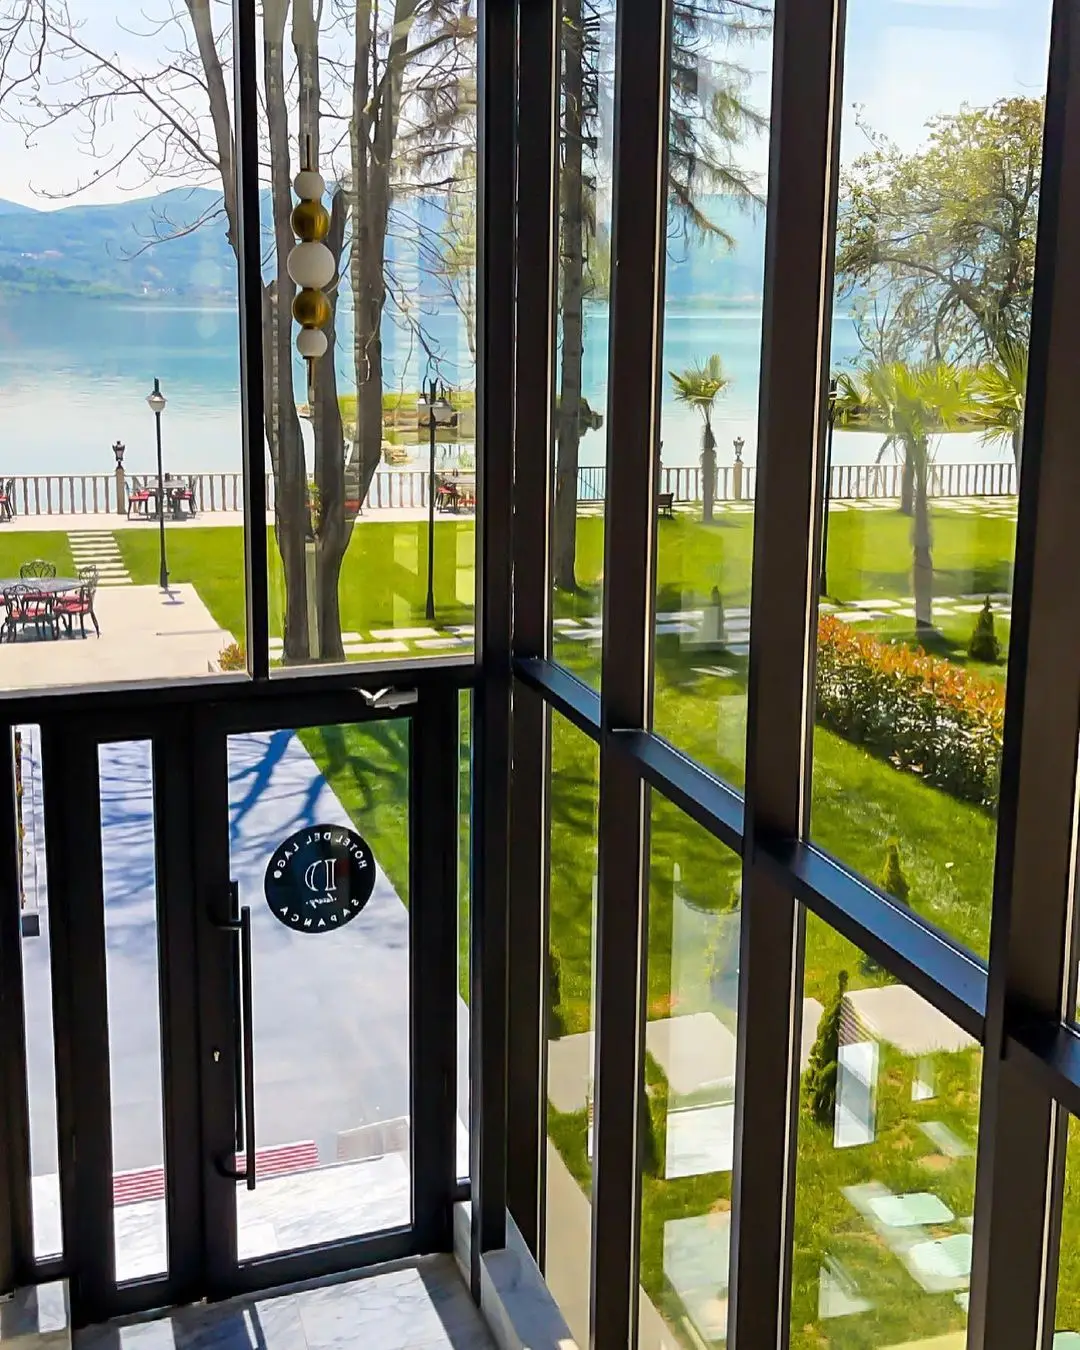 Del Lago Luxury Hotel by Saraçoğlu